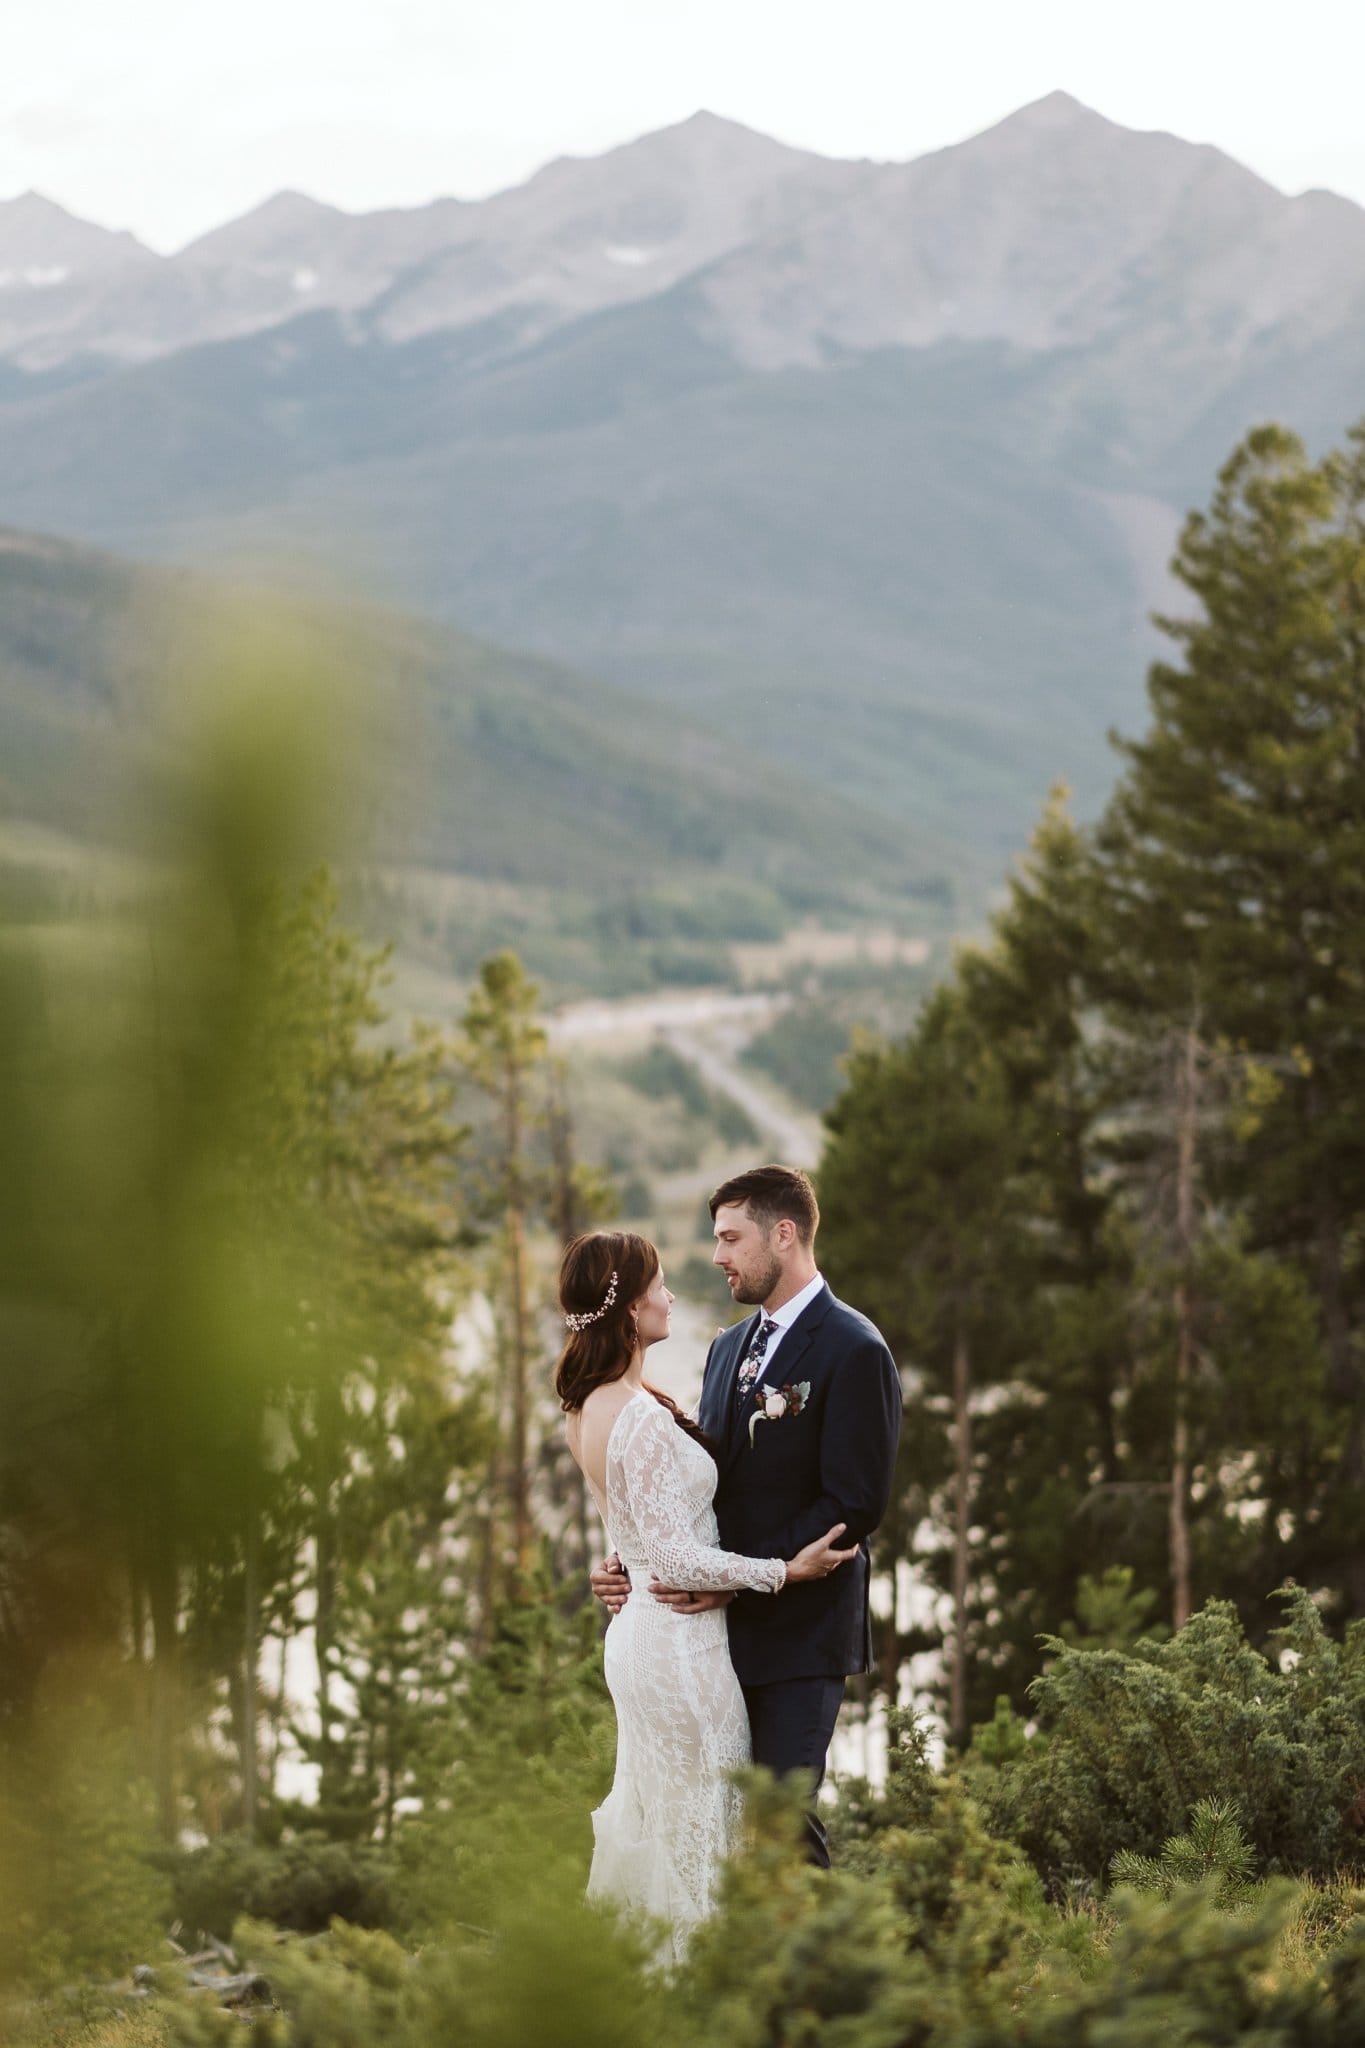 Bride and groom wedding portraits at Sapphire Point in Dillon, Colorado mountain wedding photos